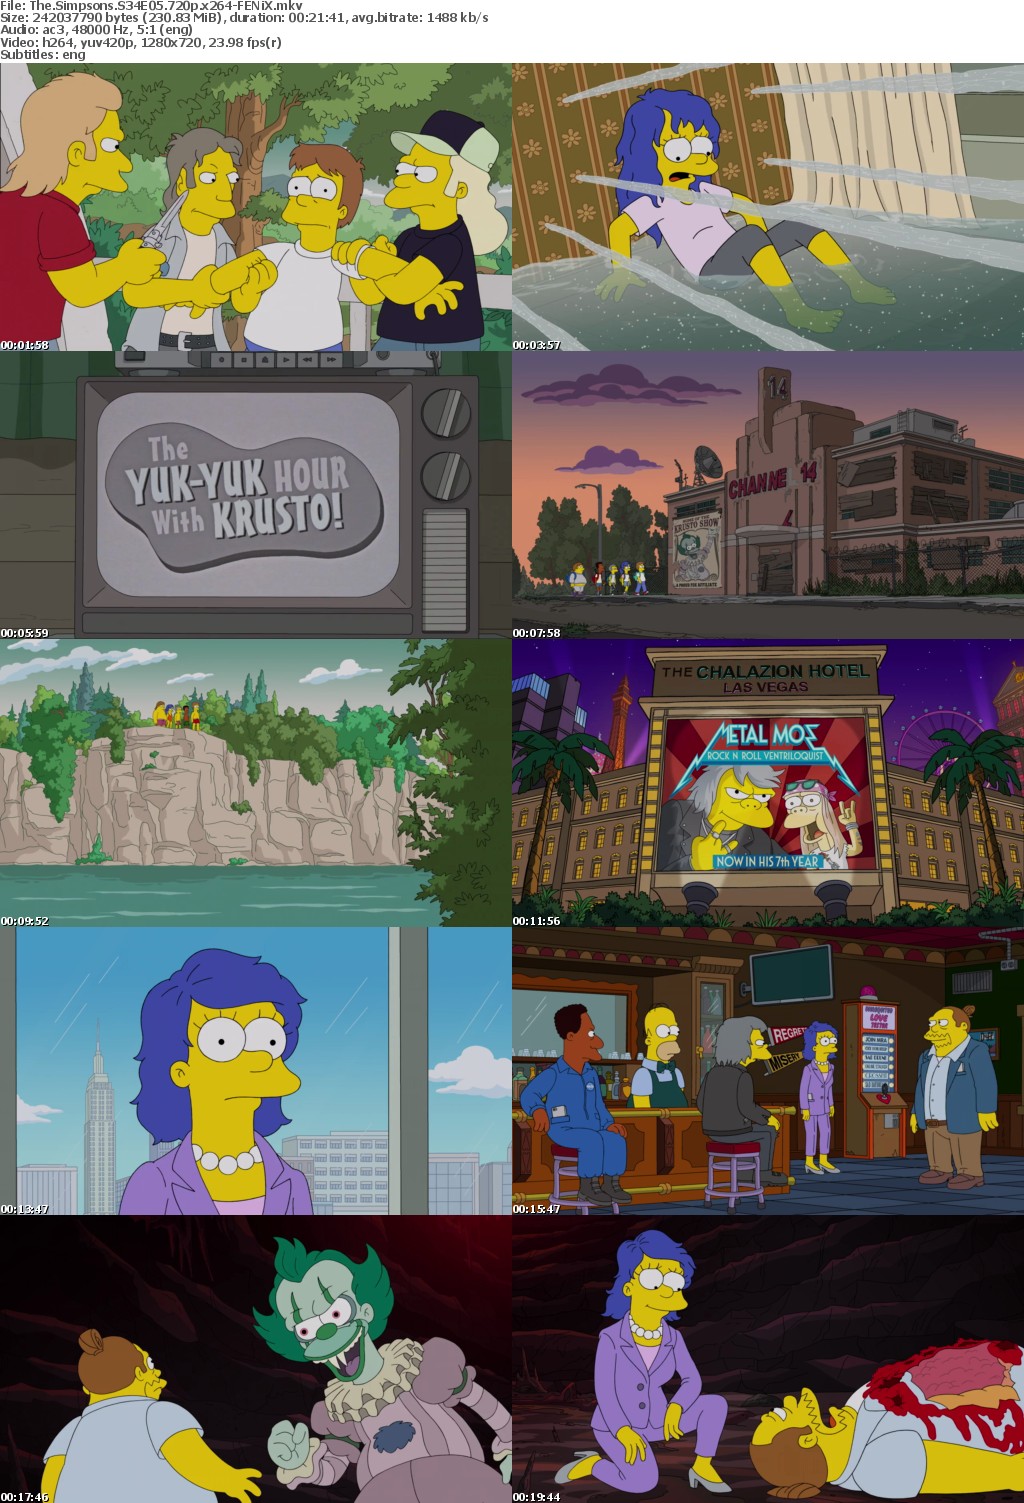 The Simpsons S34E05 720p x264-FENiX